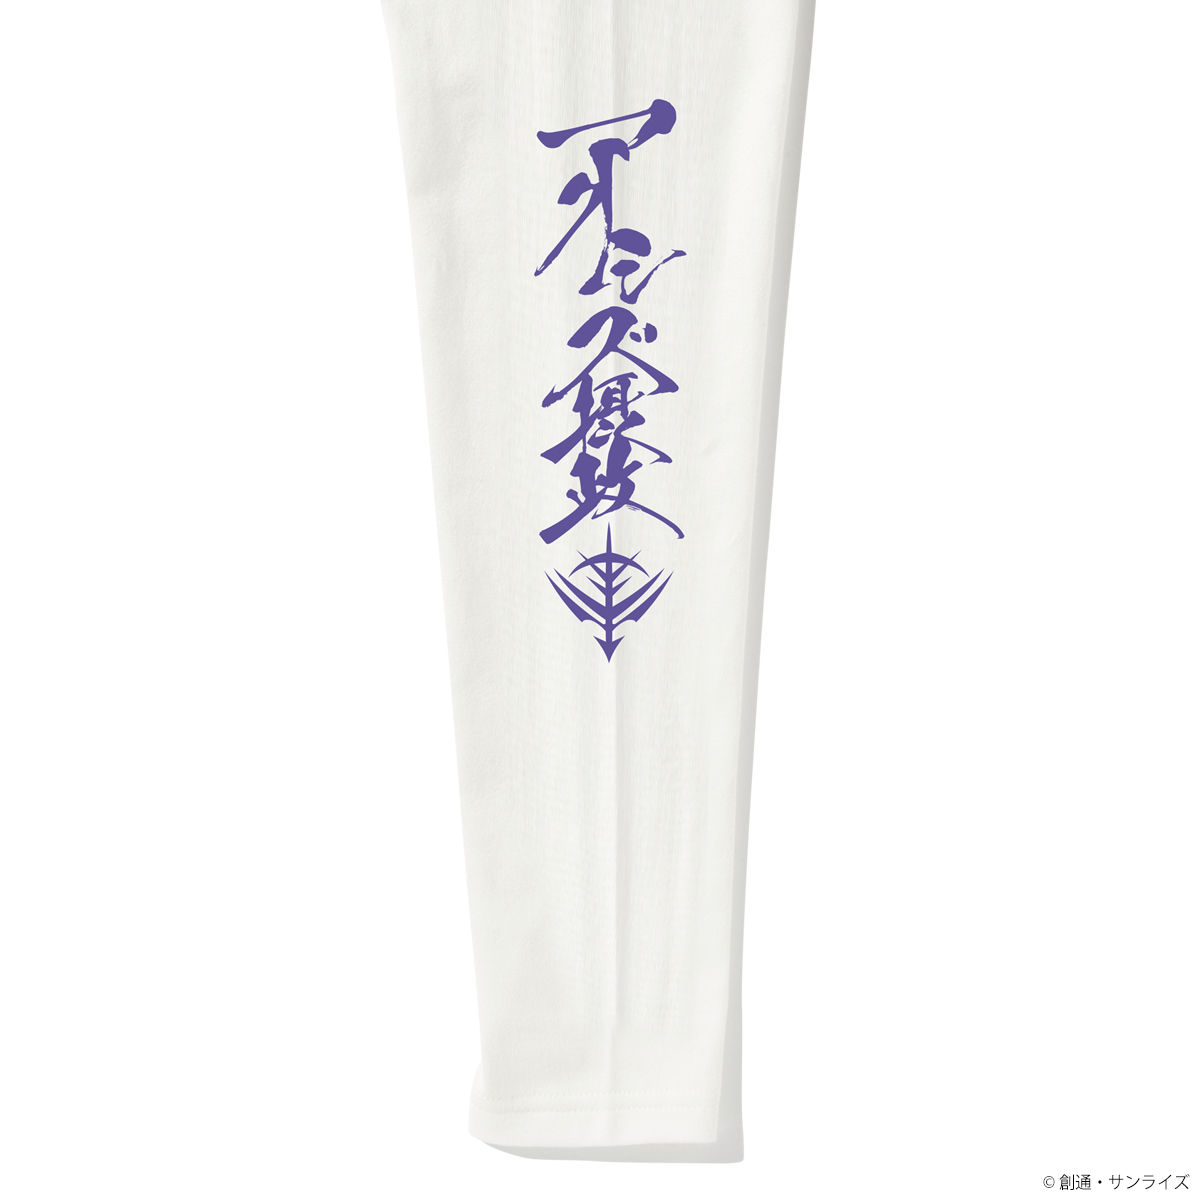 STRICT-G JAPAN 「Z GUNDAM」 Long sleeve shirts Qubeley